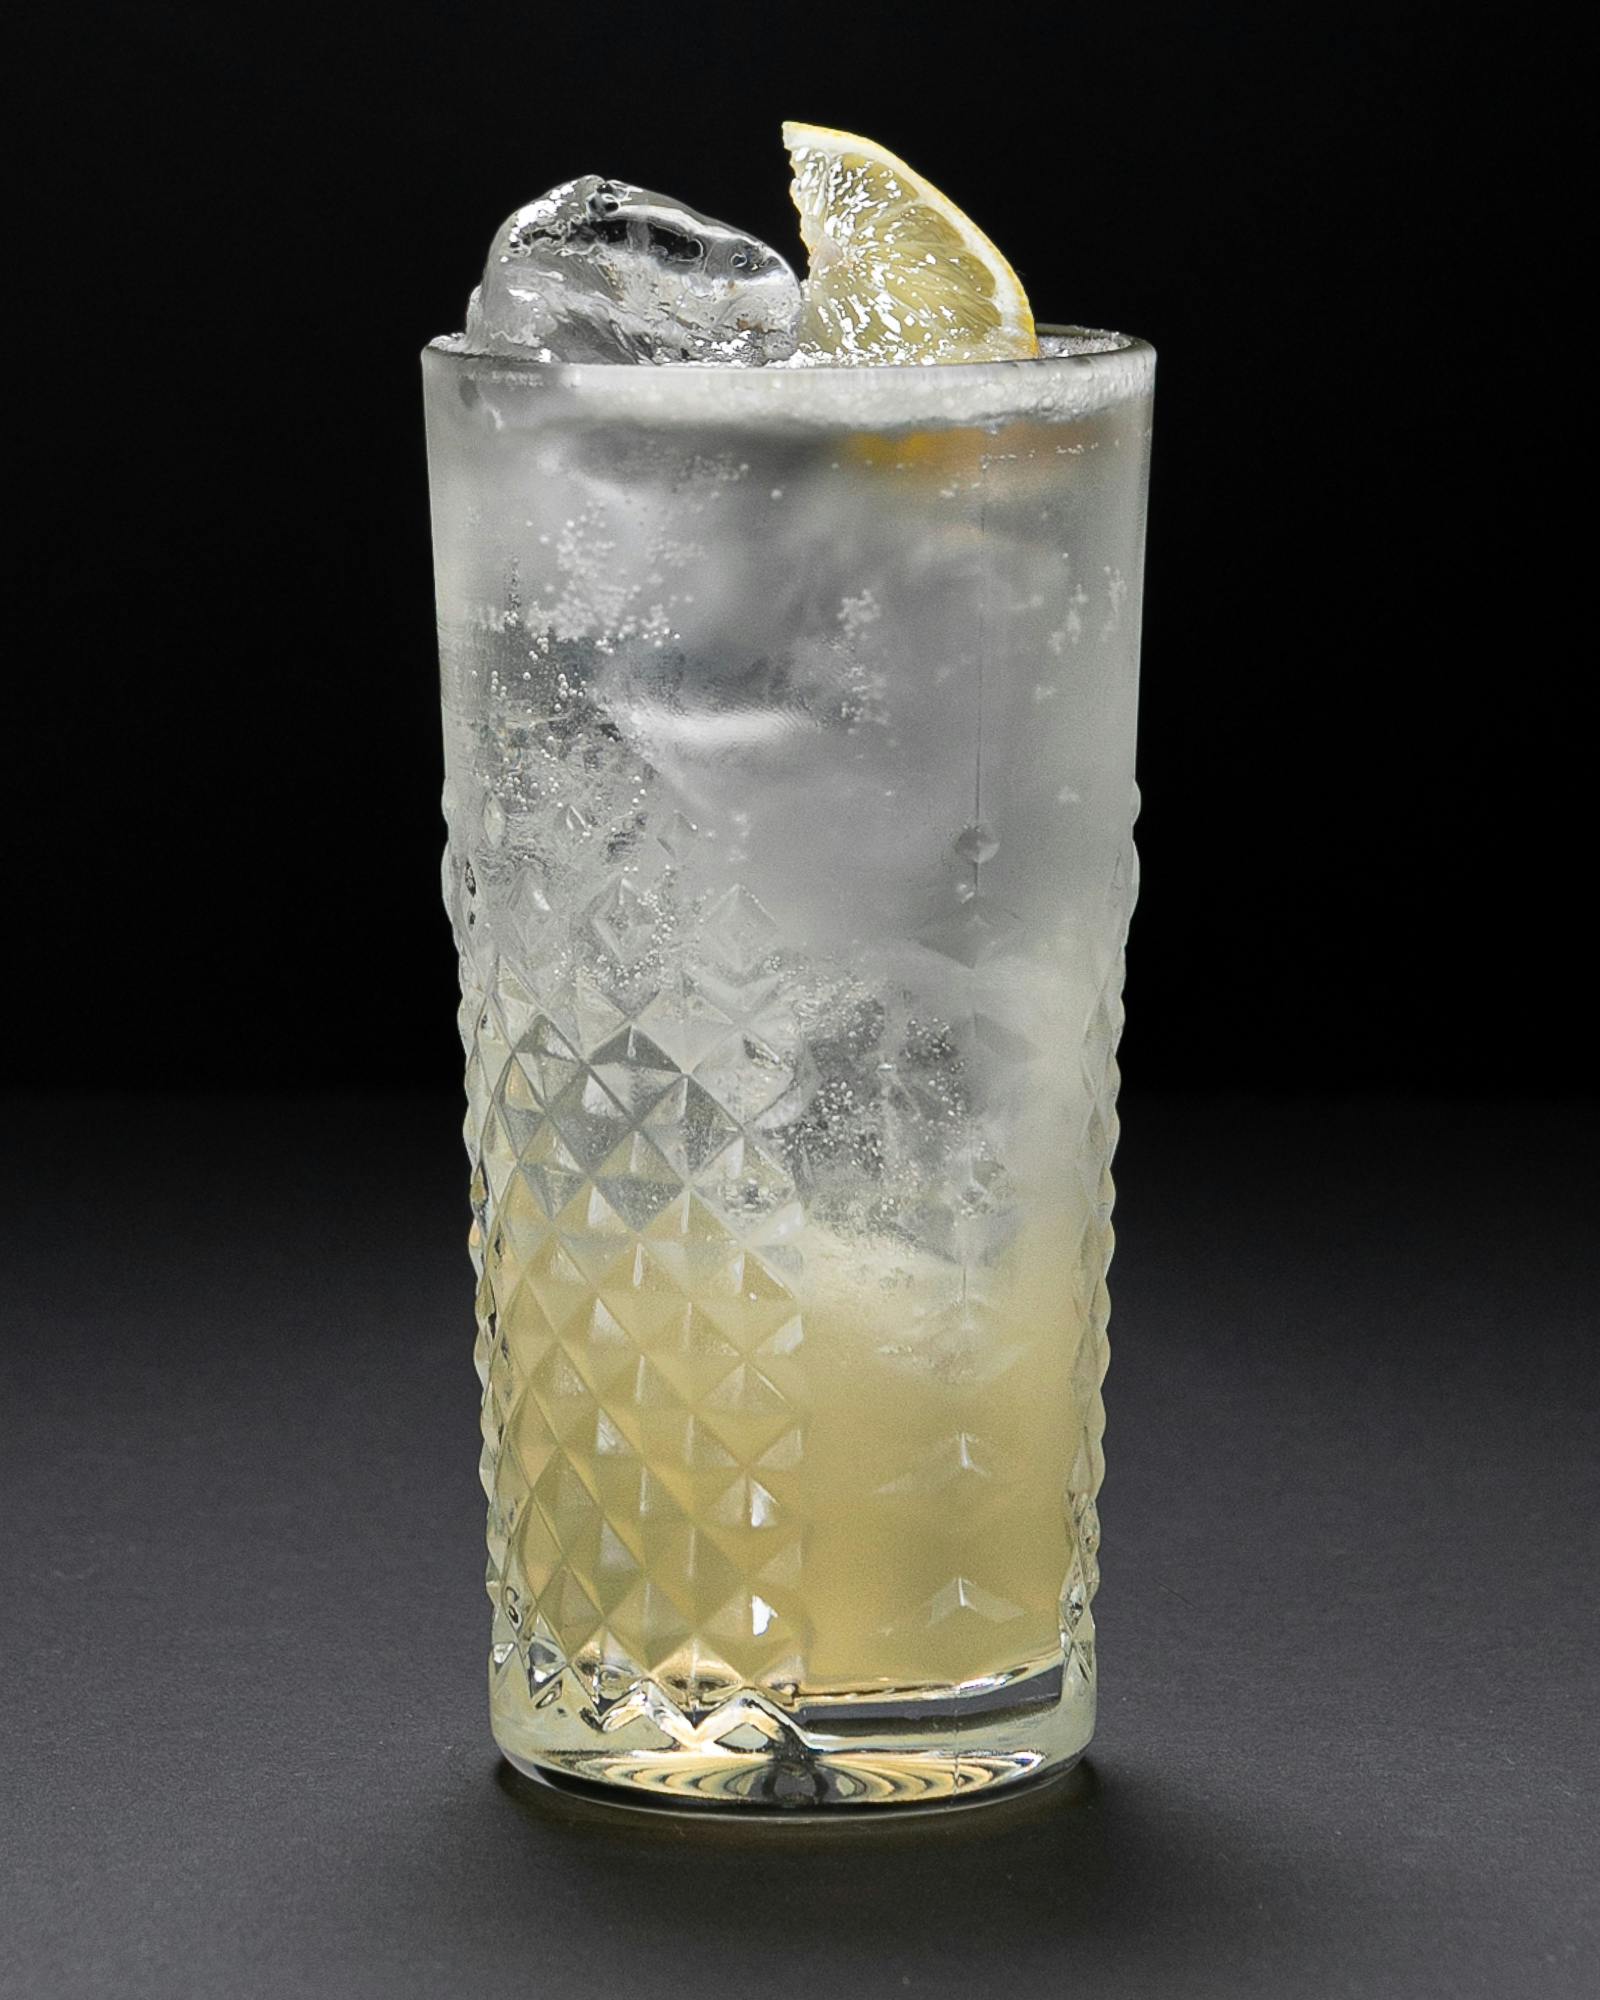 Lynchburg Lemonade - Long Drink Style